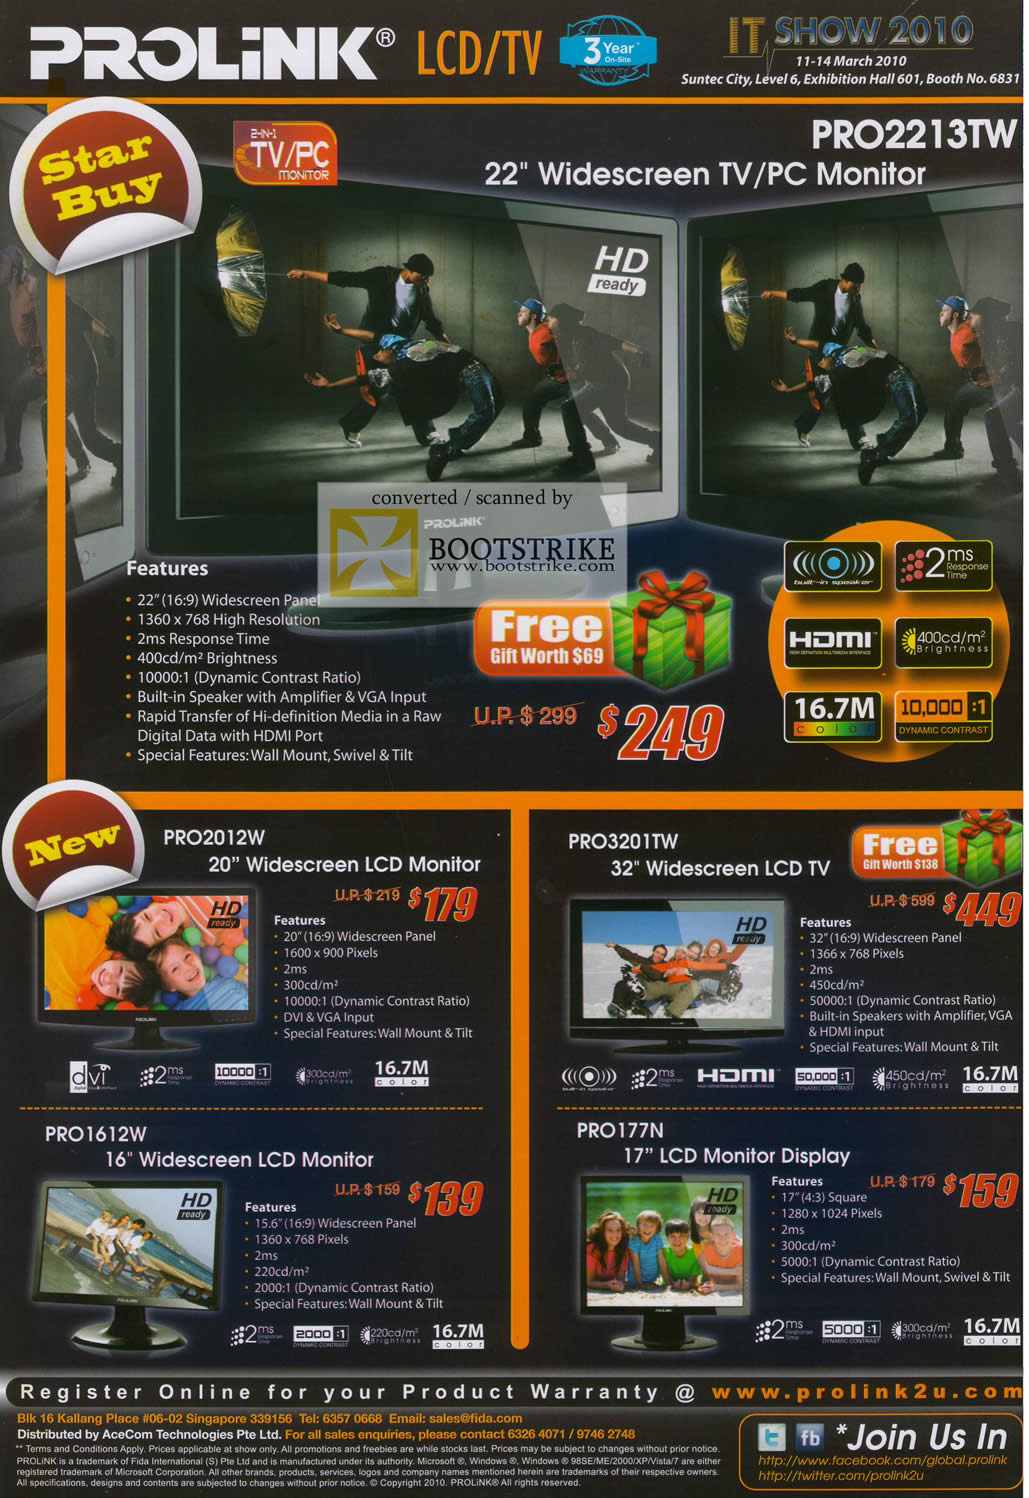 IT Show 2010 price list image brochure of Prolink LCD TV Monitor PRO2213TW PRO2012W PRO301TW PRO1612W PRO177N